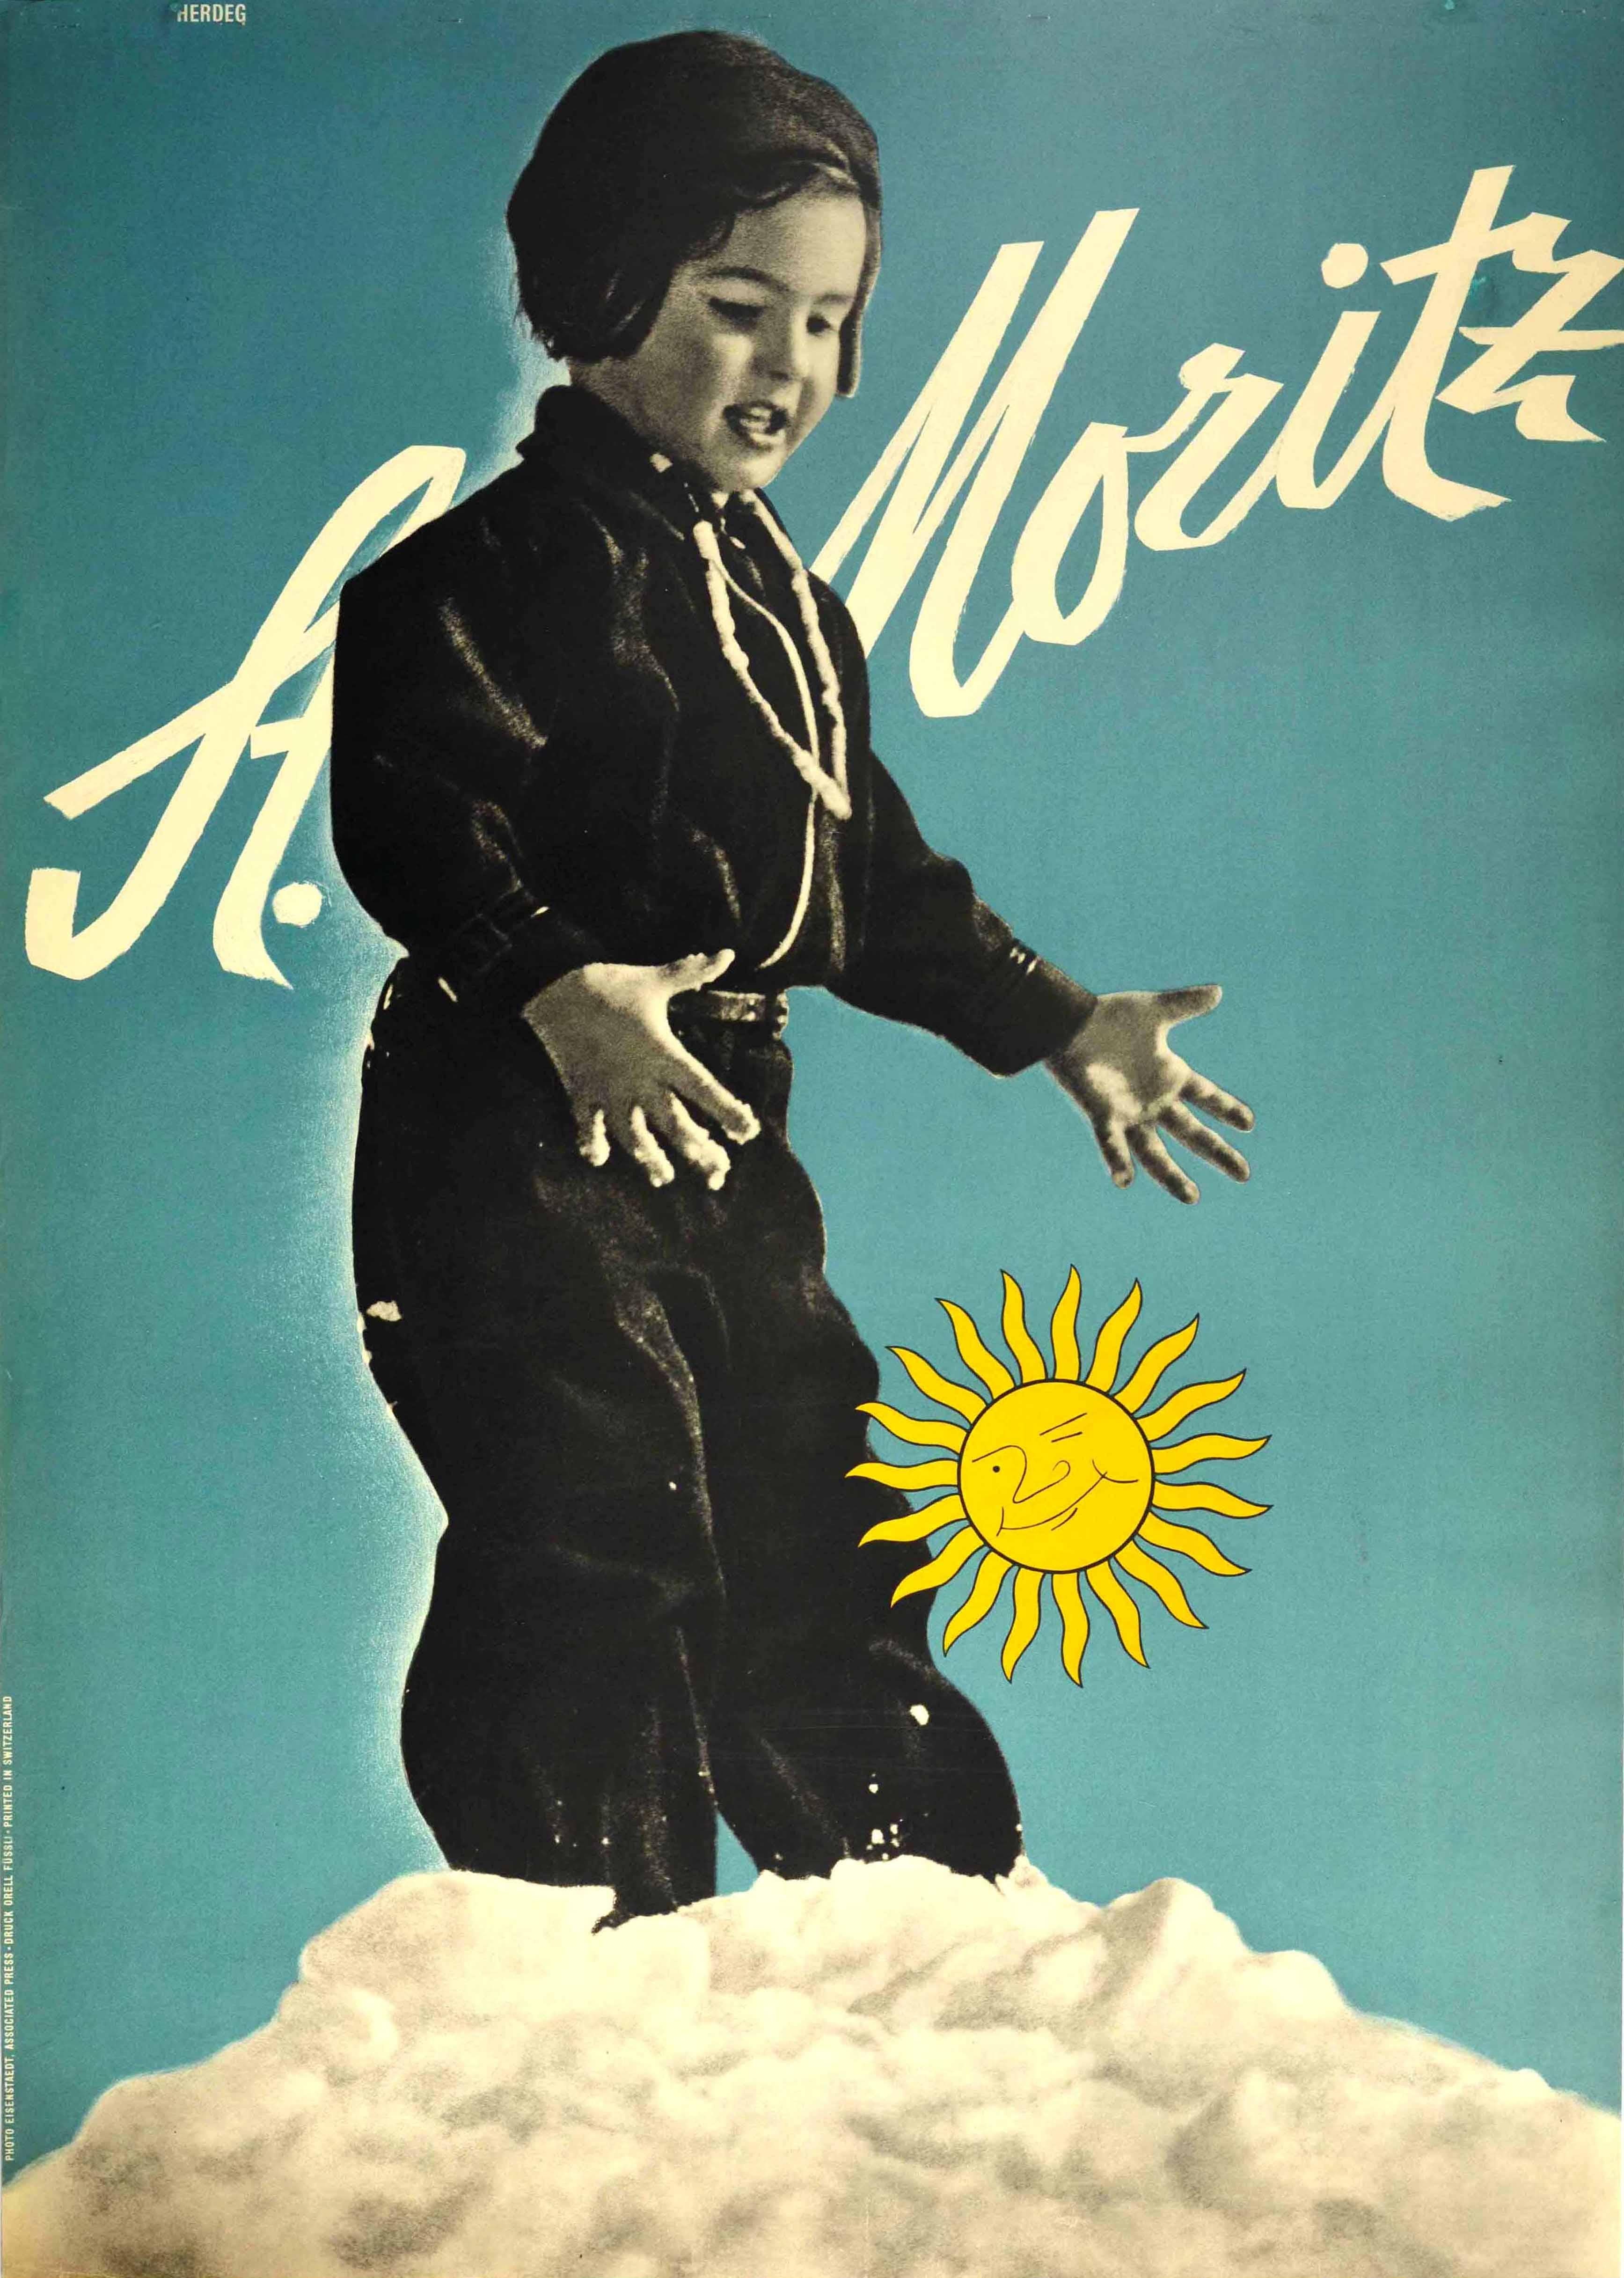 Walter Herdeg Print - Original Vintage Poster St Moritz Switzerland Ski Resort Swiss Alps Winter Sport